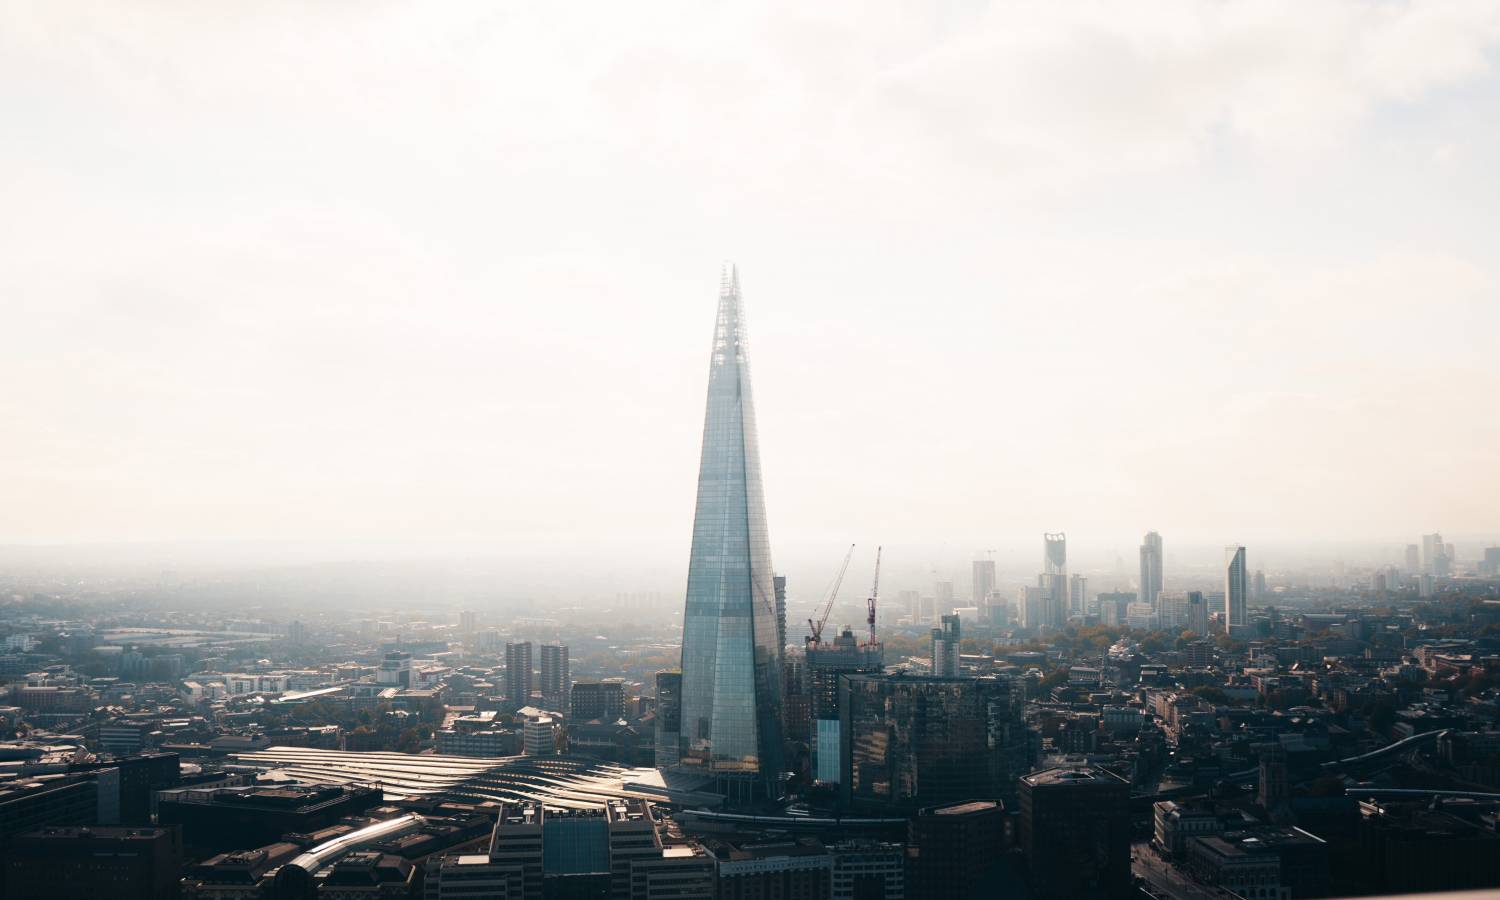 London ranks third for global super-prime property stock